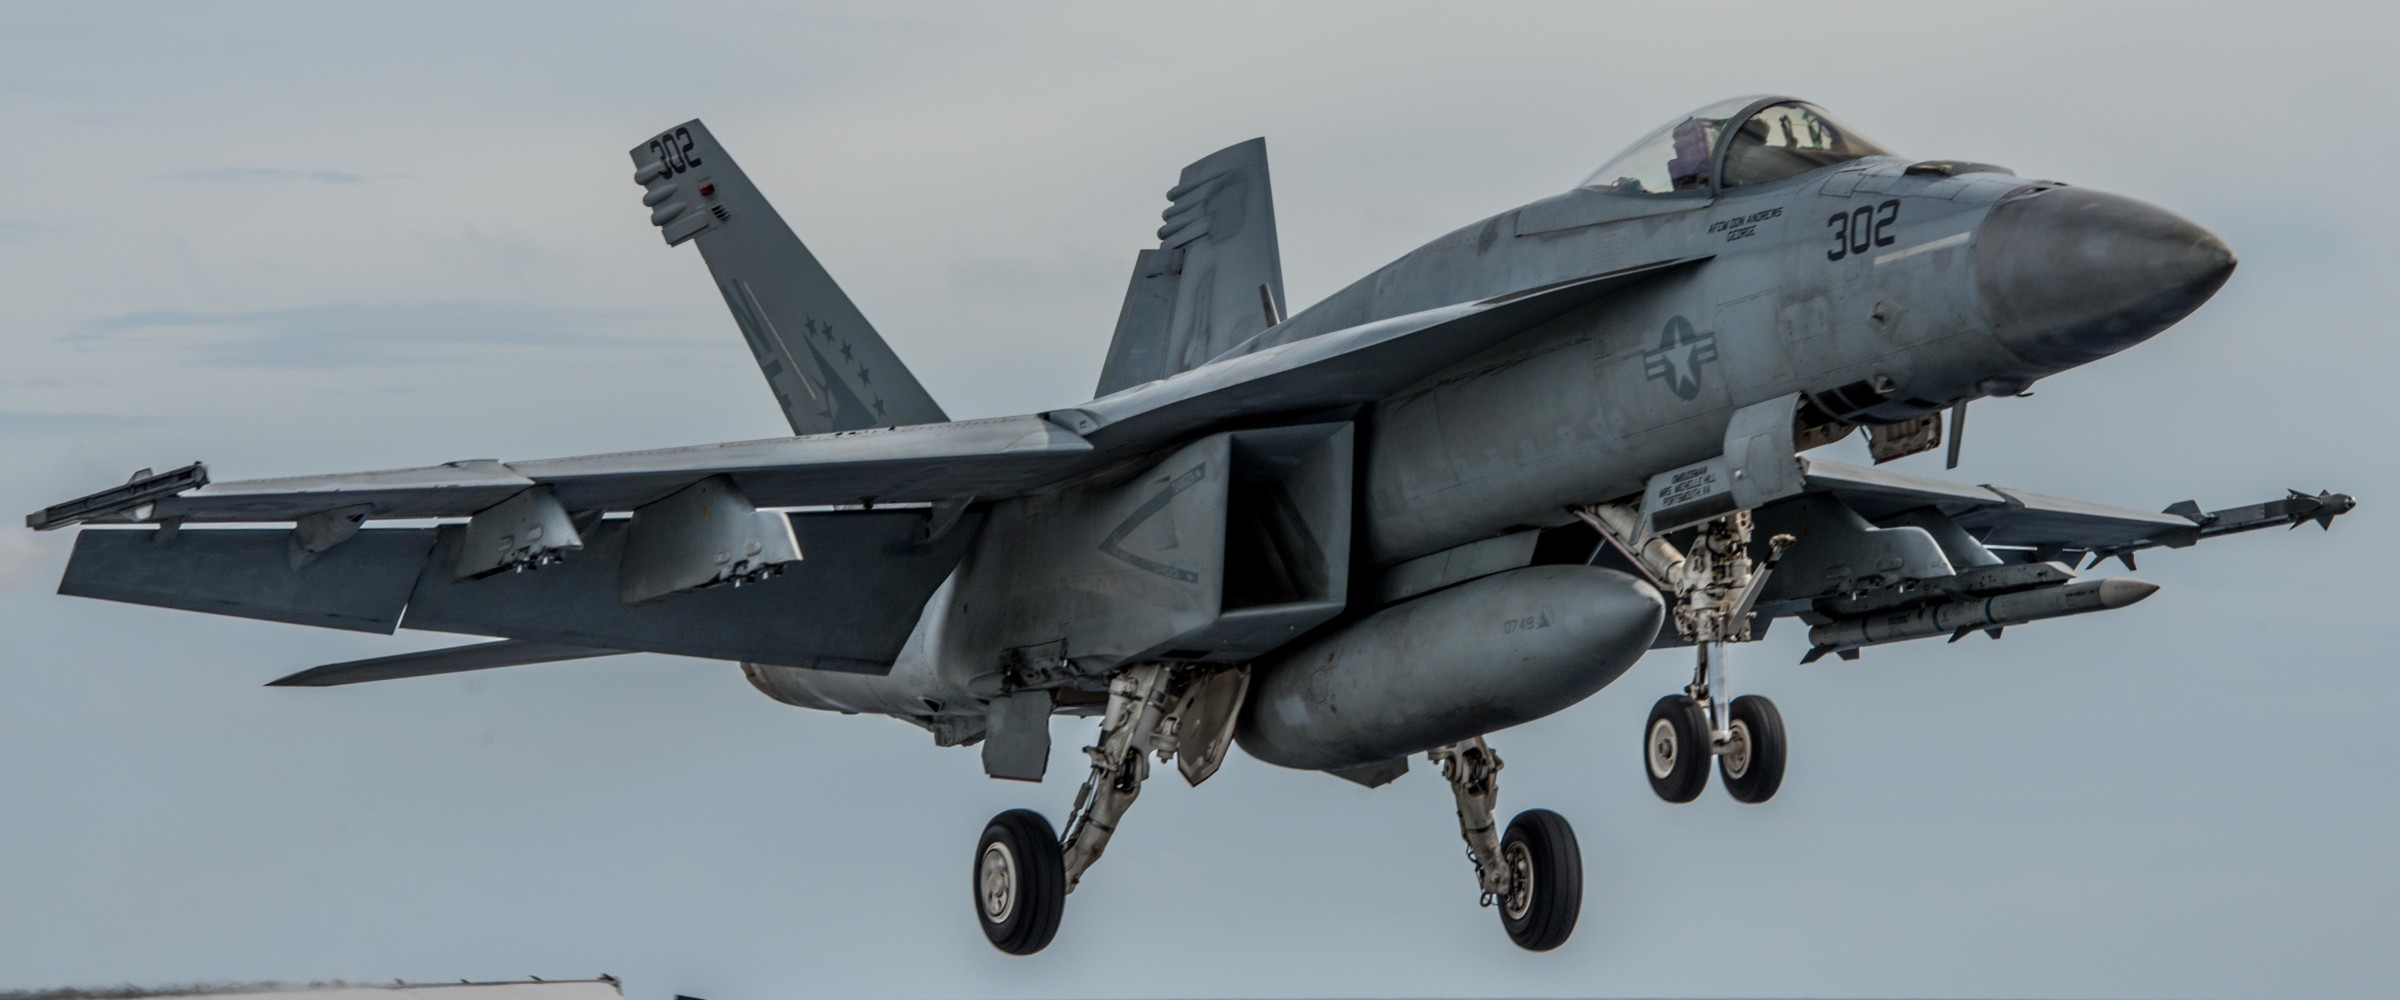 vfa-115 eagles strike fighter squadron f/a-18e super hornet cvw-5 uss ronald reagan cvn-76 2016 12